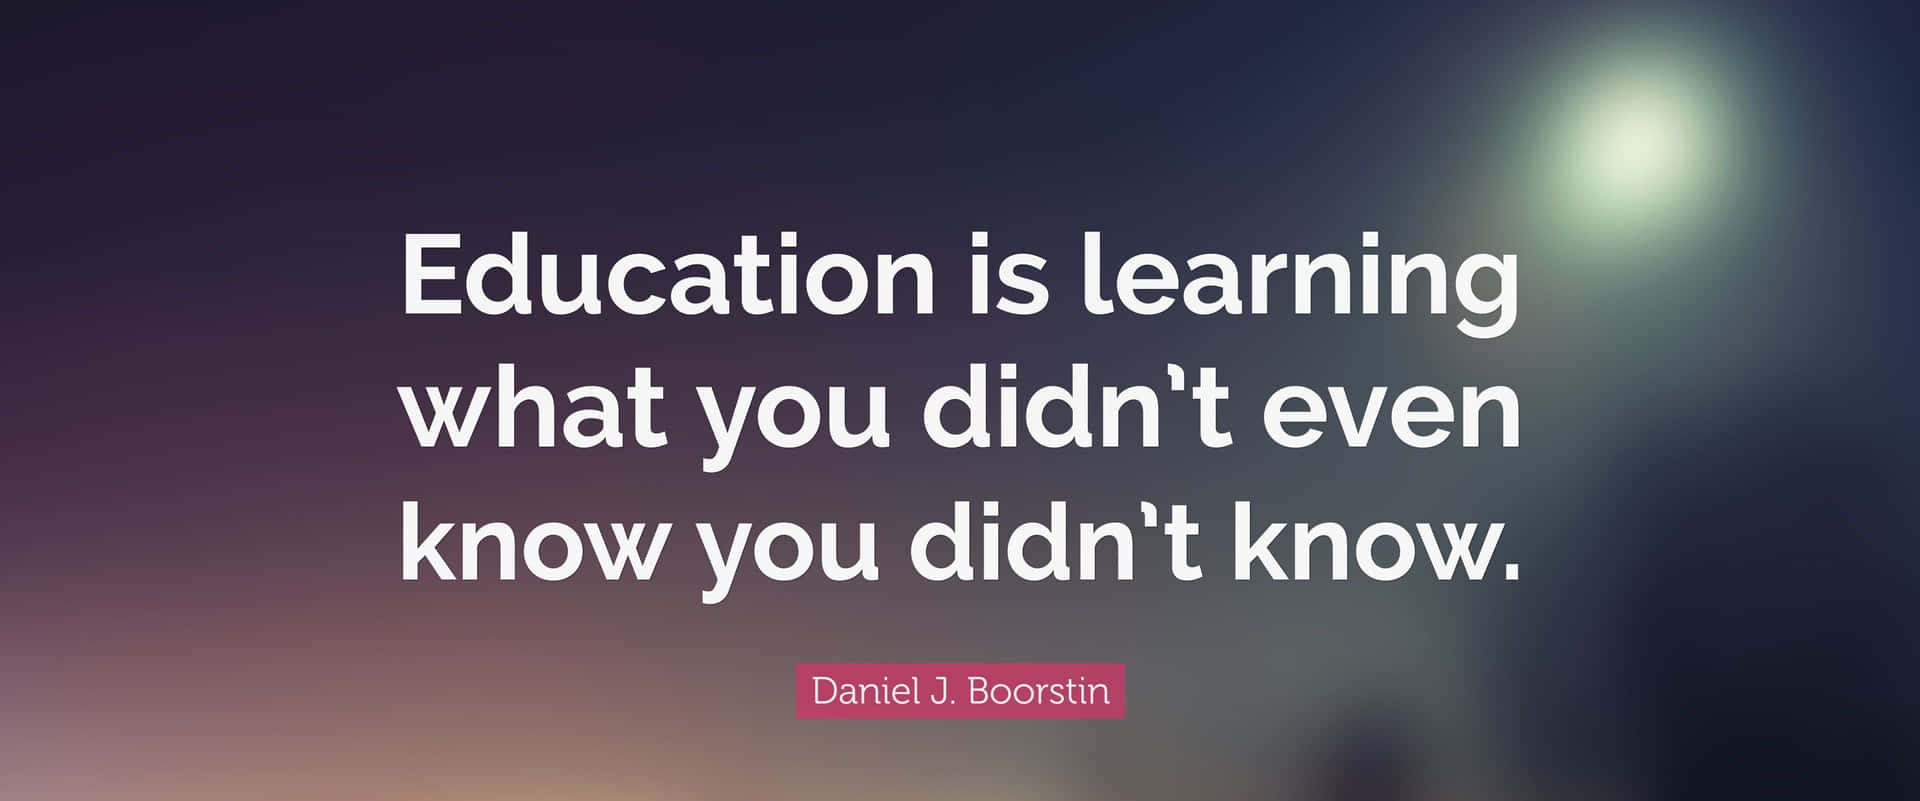 Education Learning Quote Daniel Boorstin Wallpaper